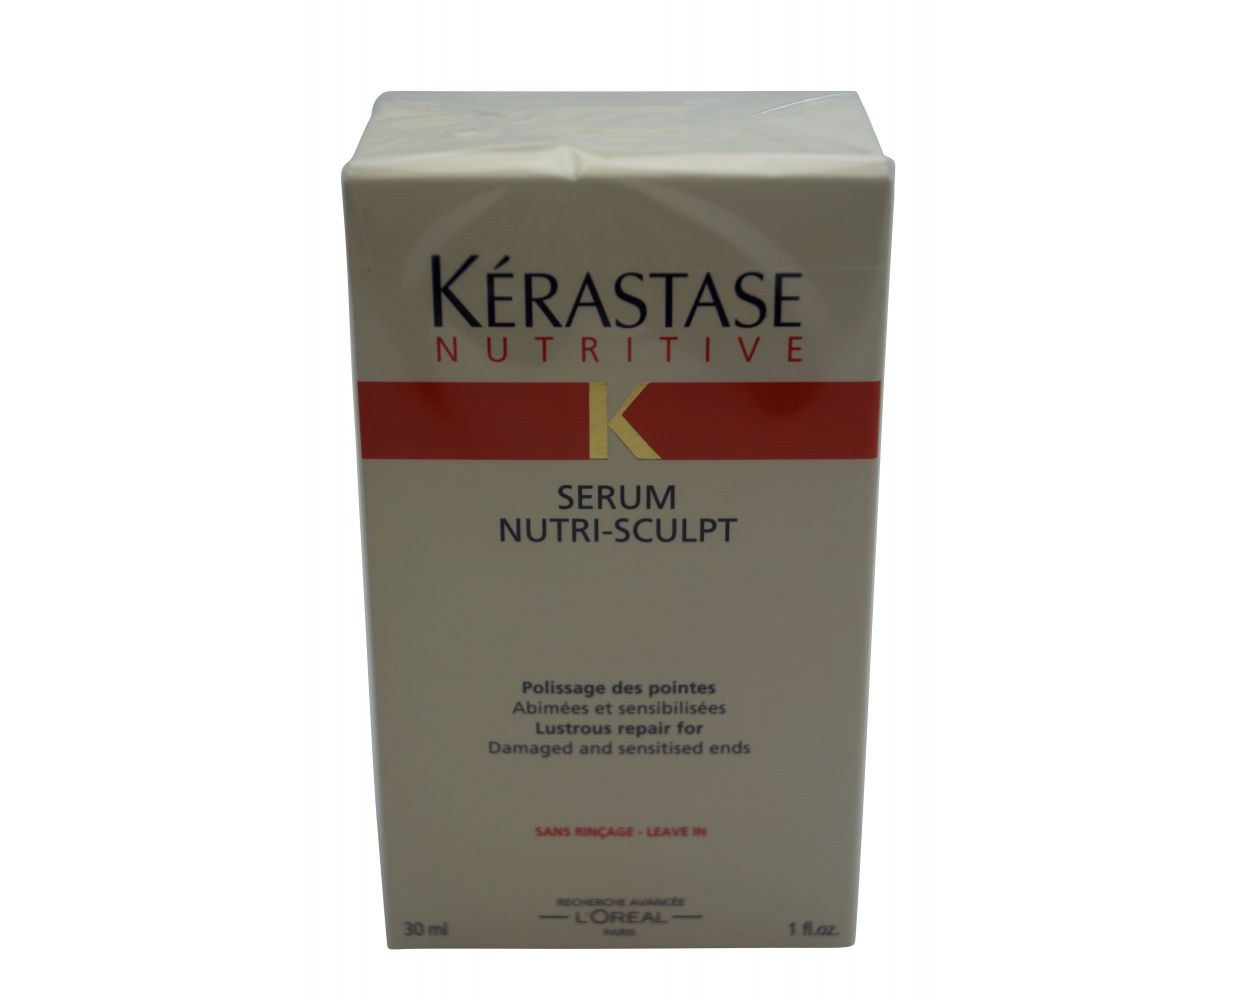 Kerastase Nutritive Serum Nutri-Sculpt Lustrous Repair for Damaged Ends | Styling Aids -